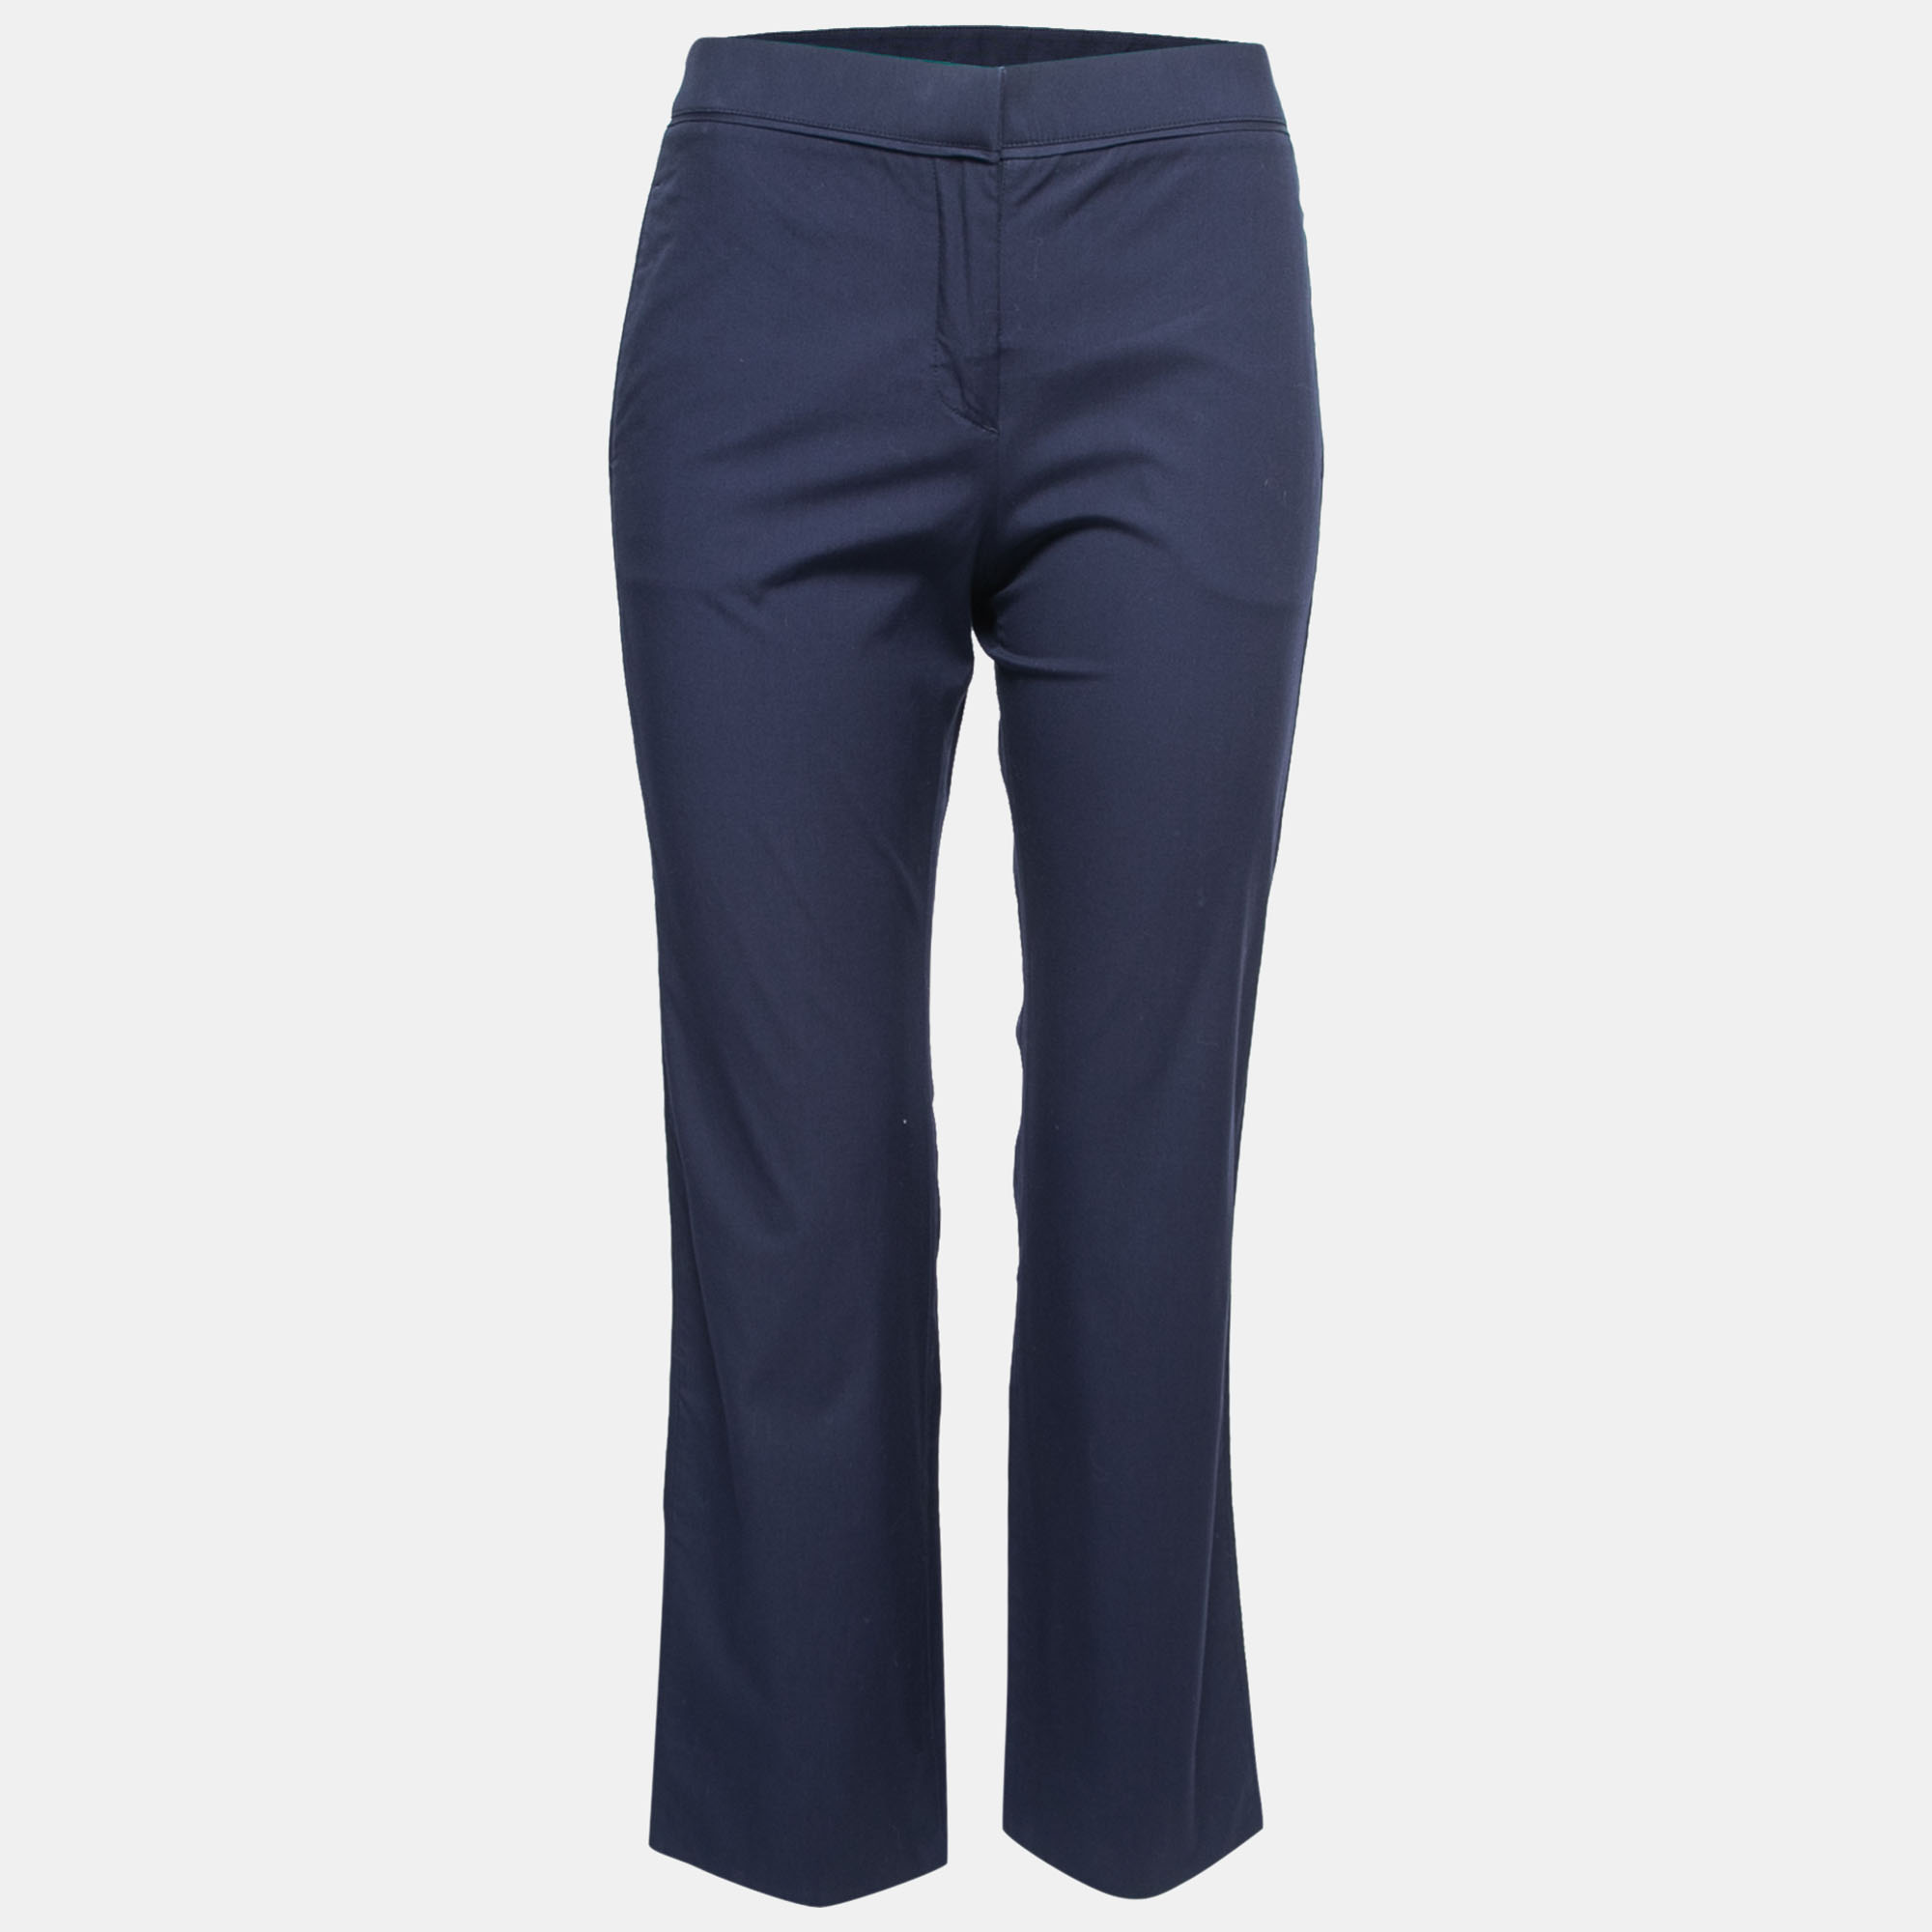 Valentino navy blue cotton straight leg ankle length pants s